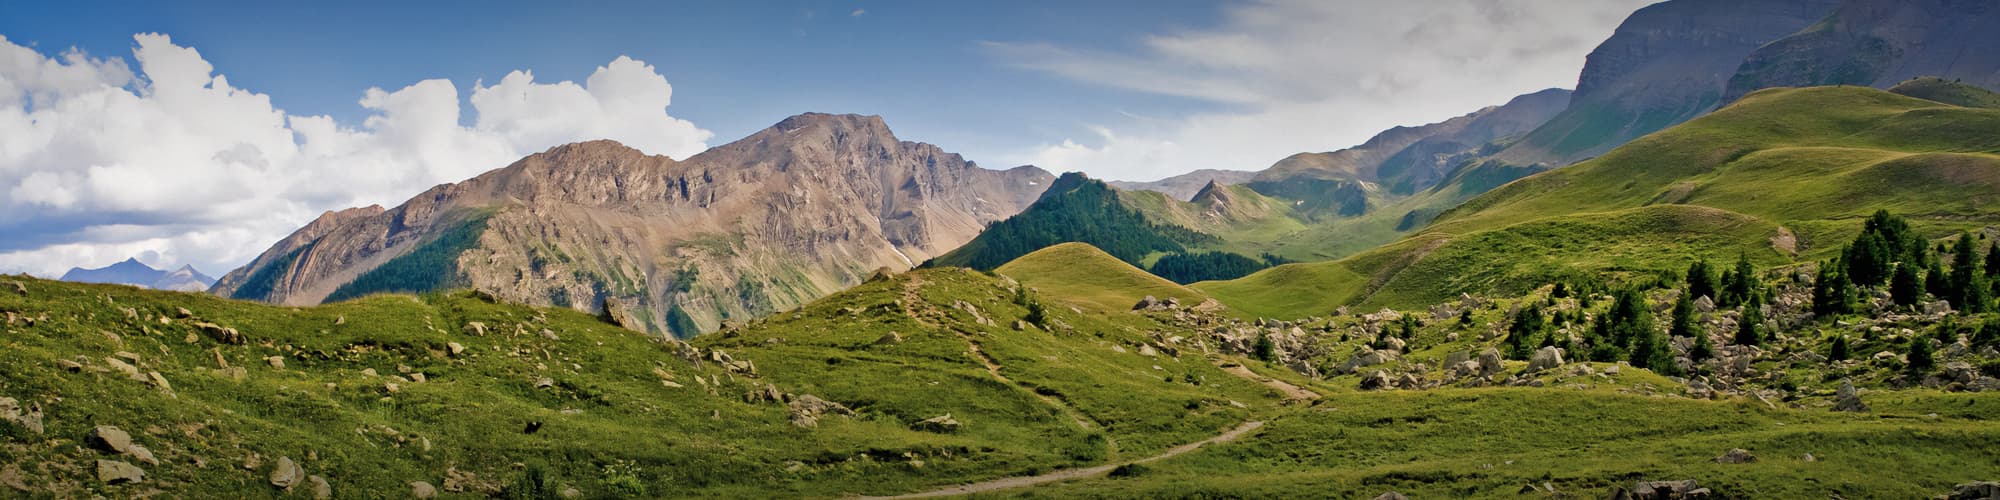 Voyage liberté Alpes du Sud © Uolir / Adobe Stock